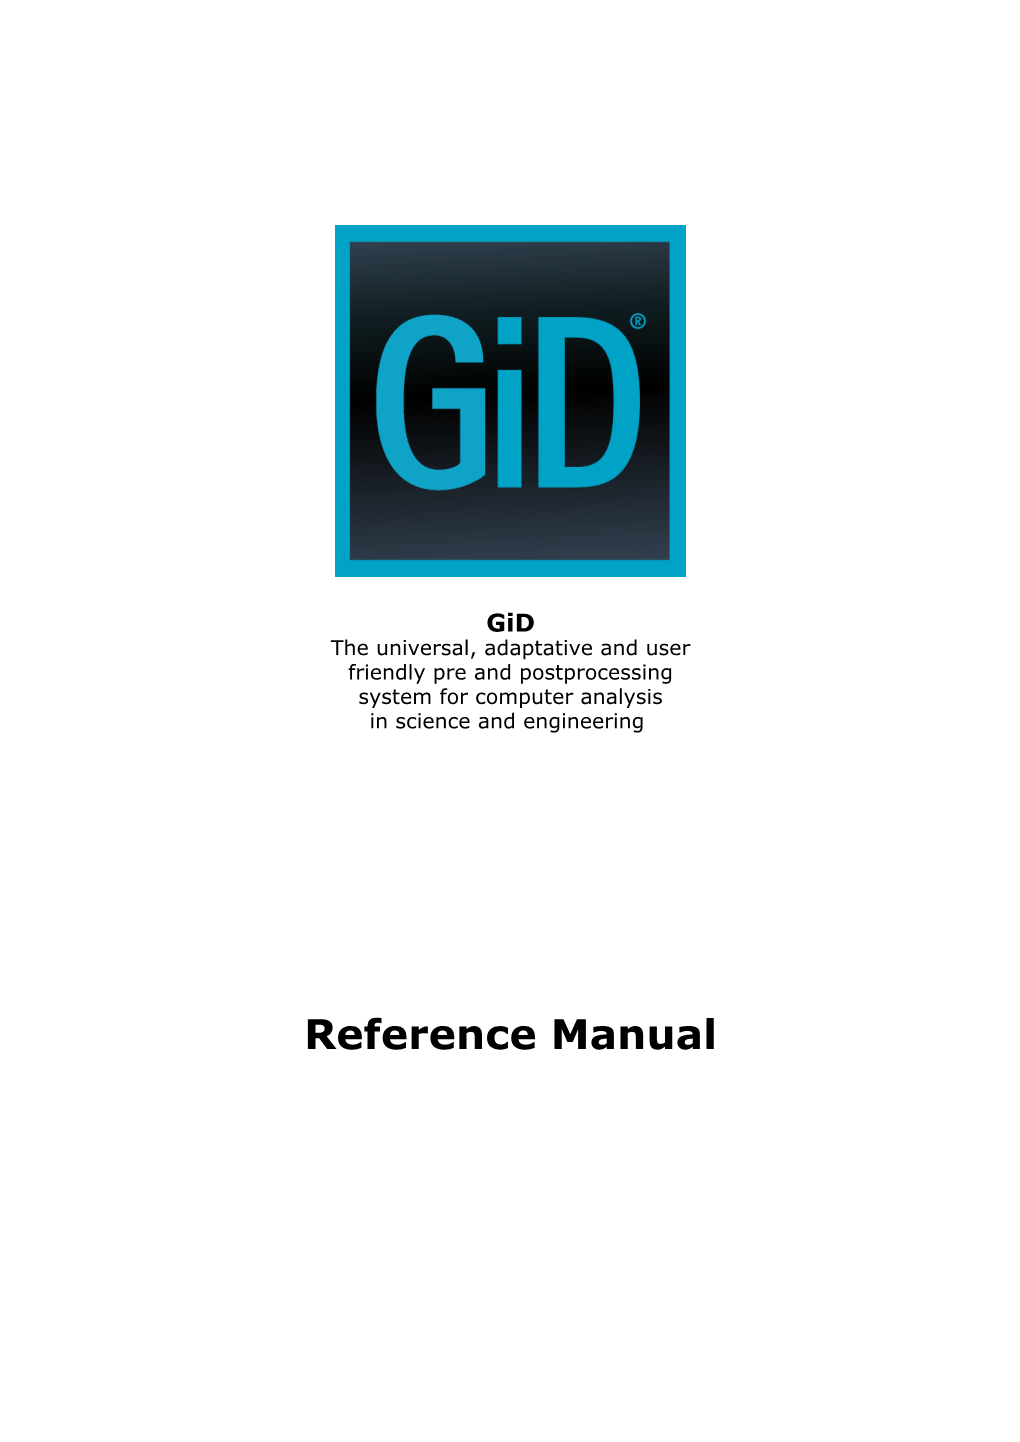 Reference Manual Ii